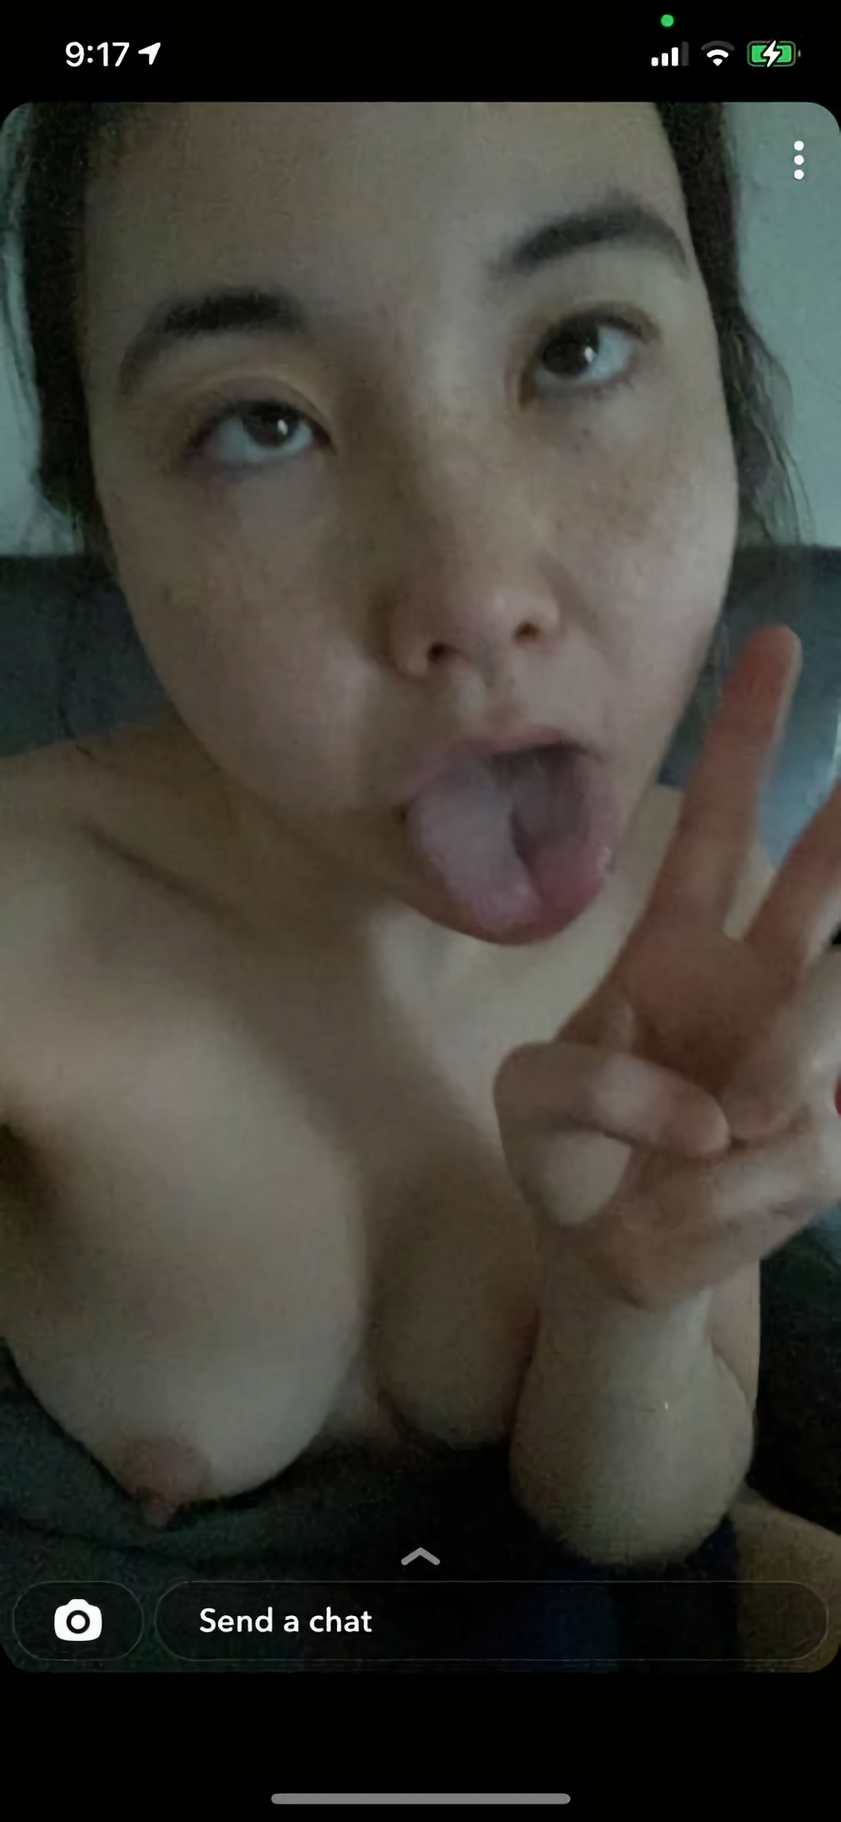 Sexy Asian webslut Lauren